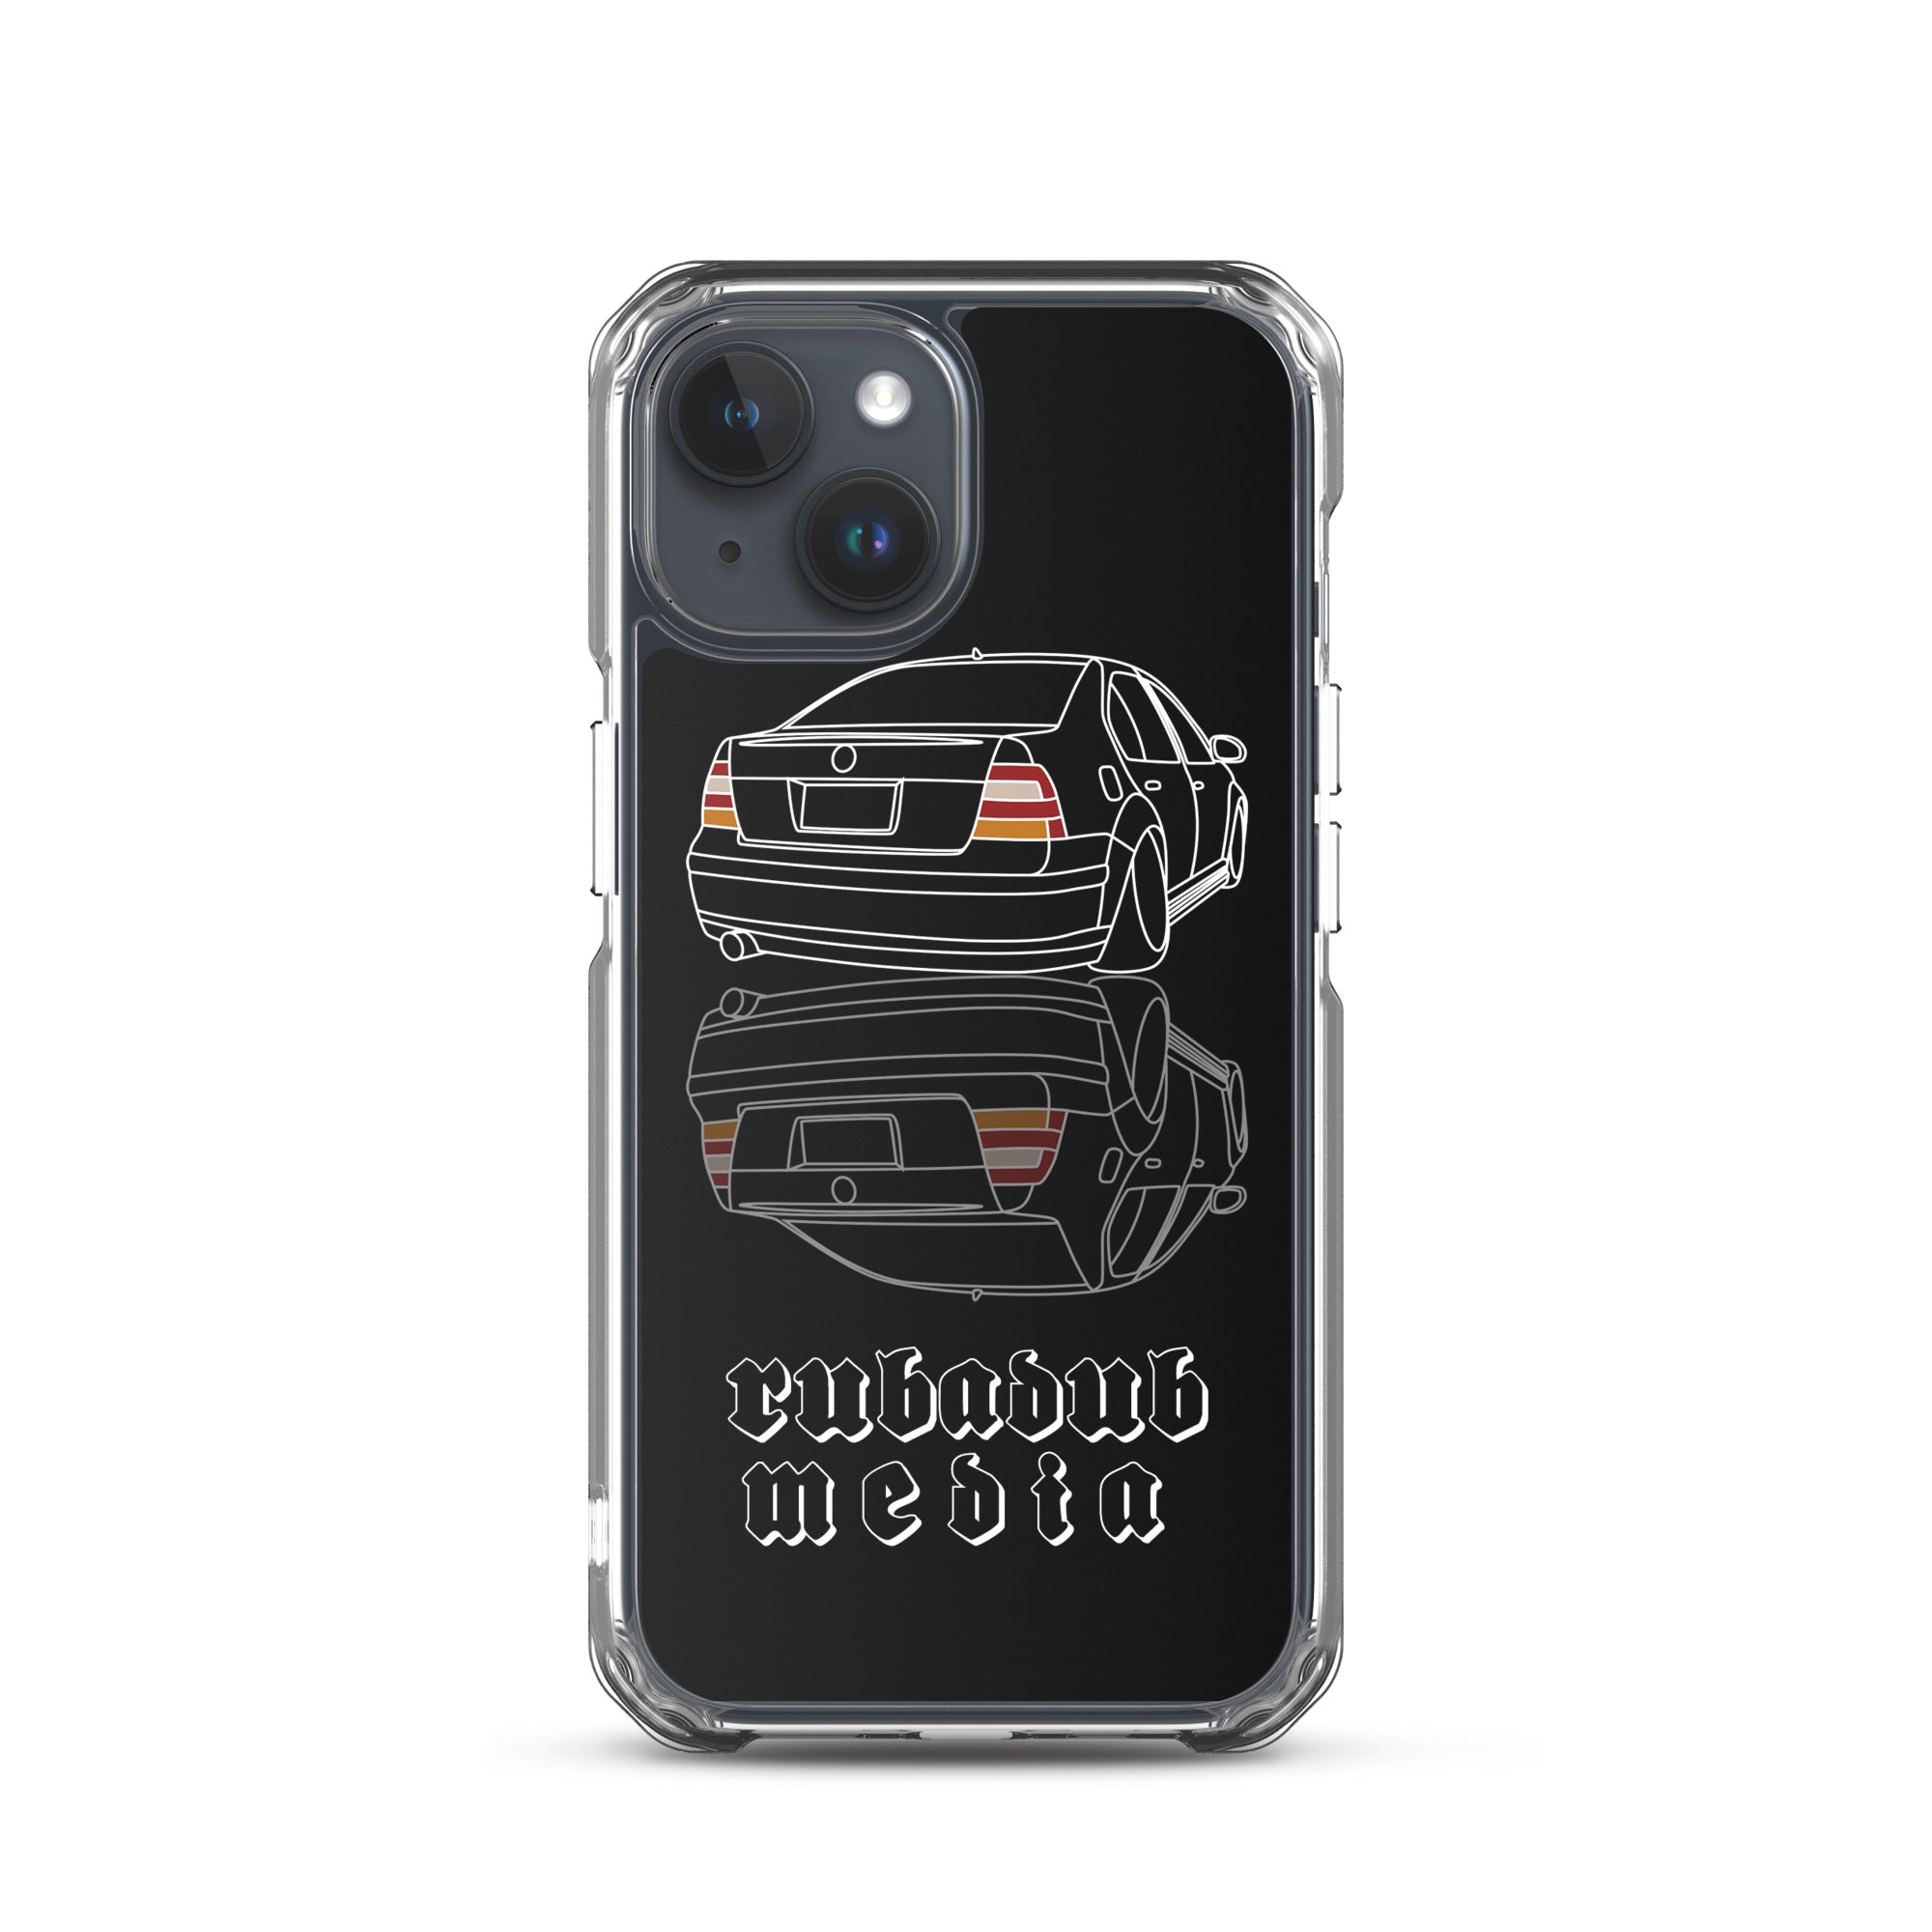 Mk4 Jetta / Bora iPhone Case